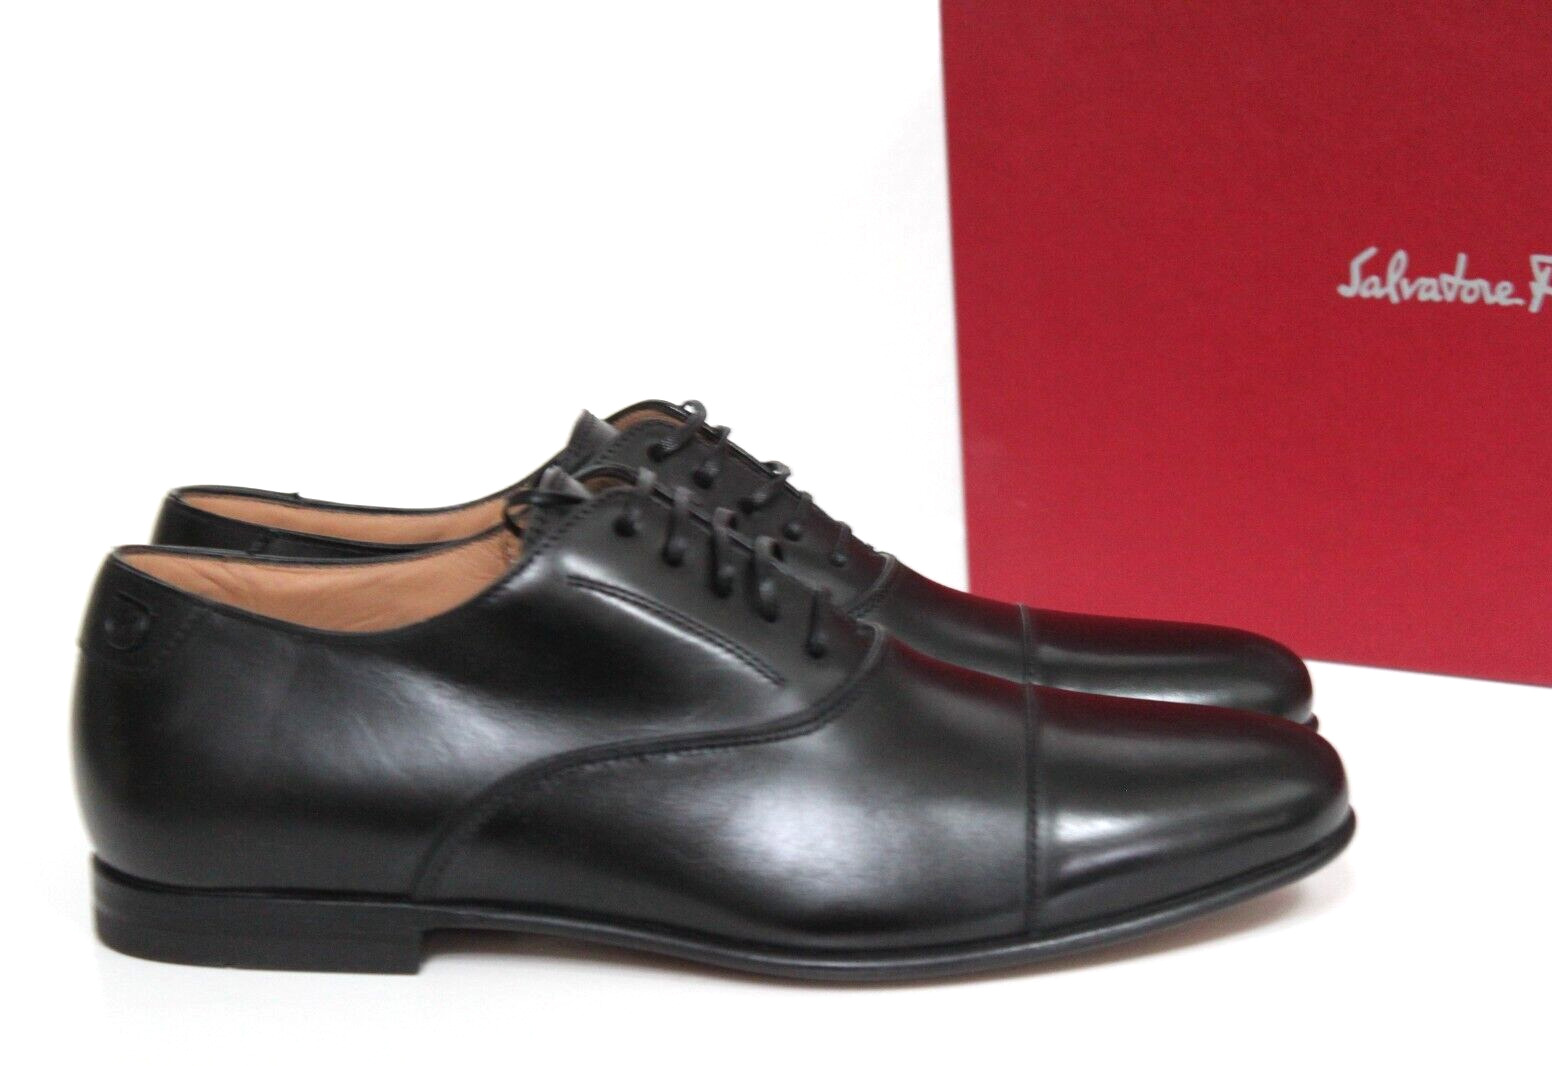 New sz 7 D SALVATORE FERRAGAMO Gillo Black Leather Driving Loafer Men Shoes